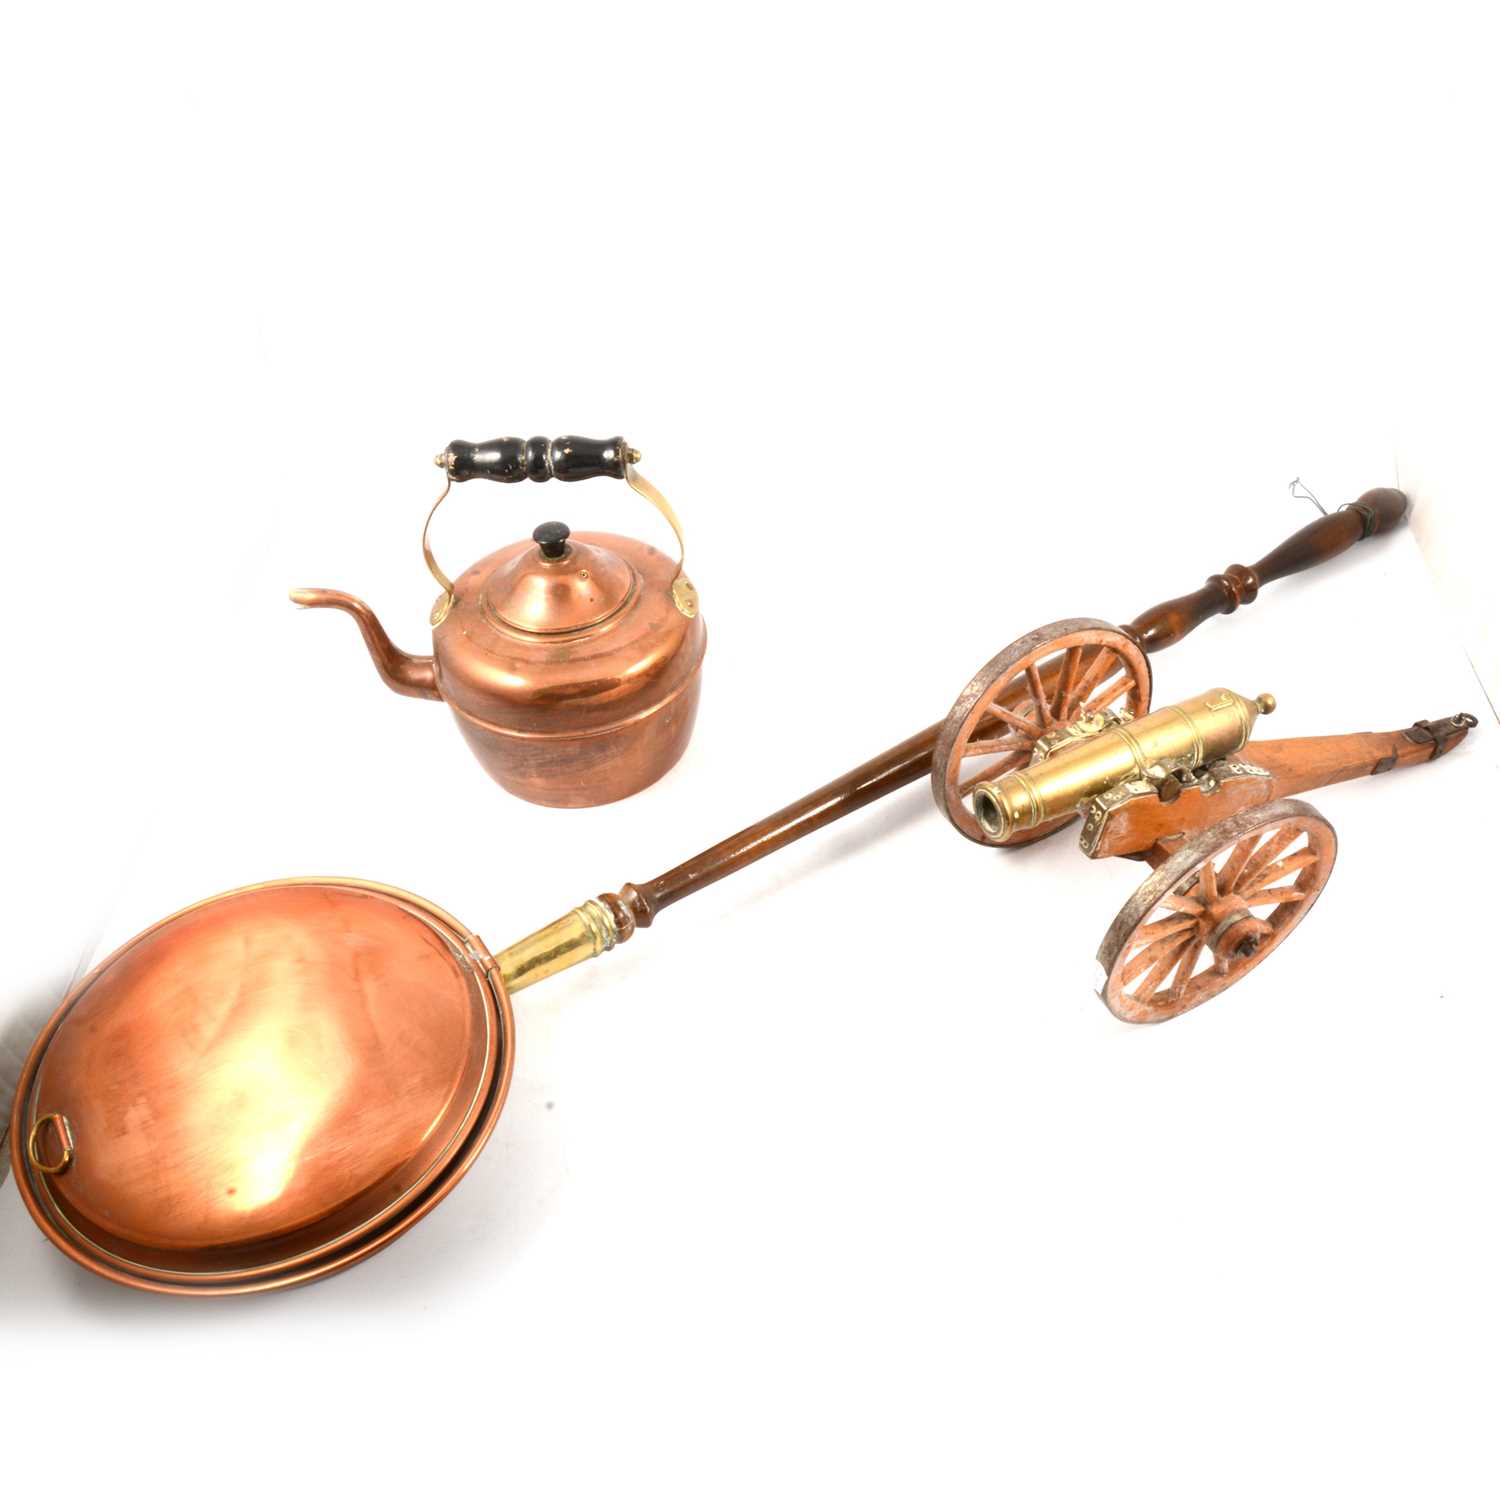 Lot 114 - A copper warming pan, kettle and handmade gun carriage.